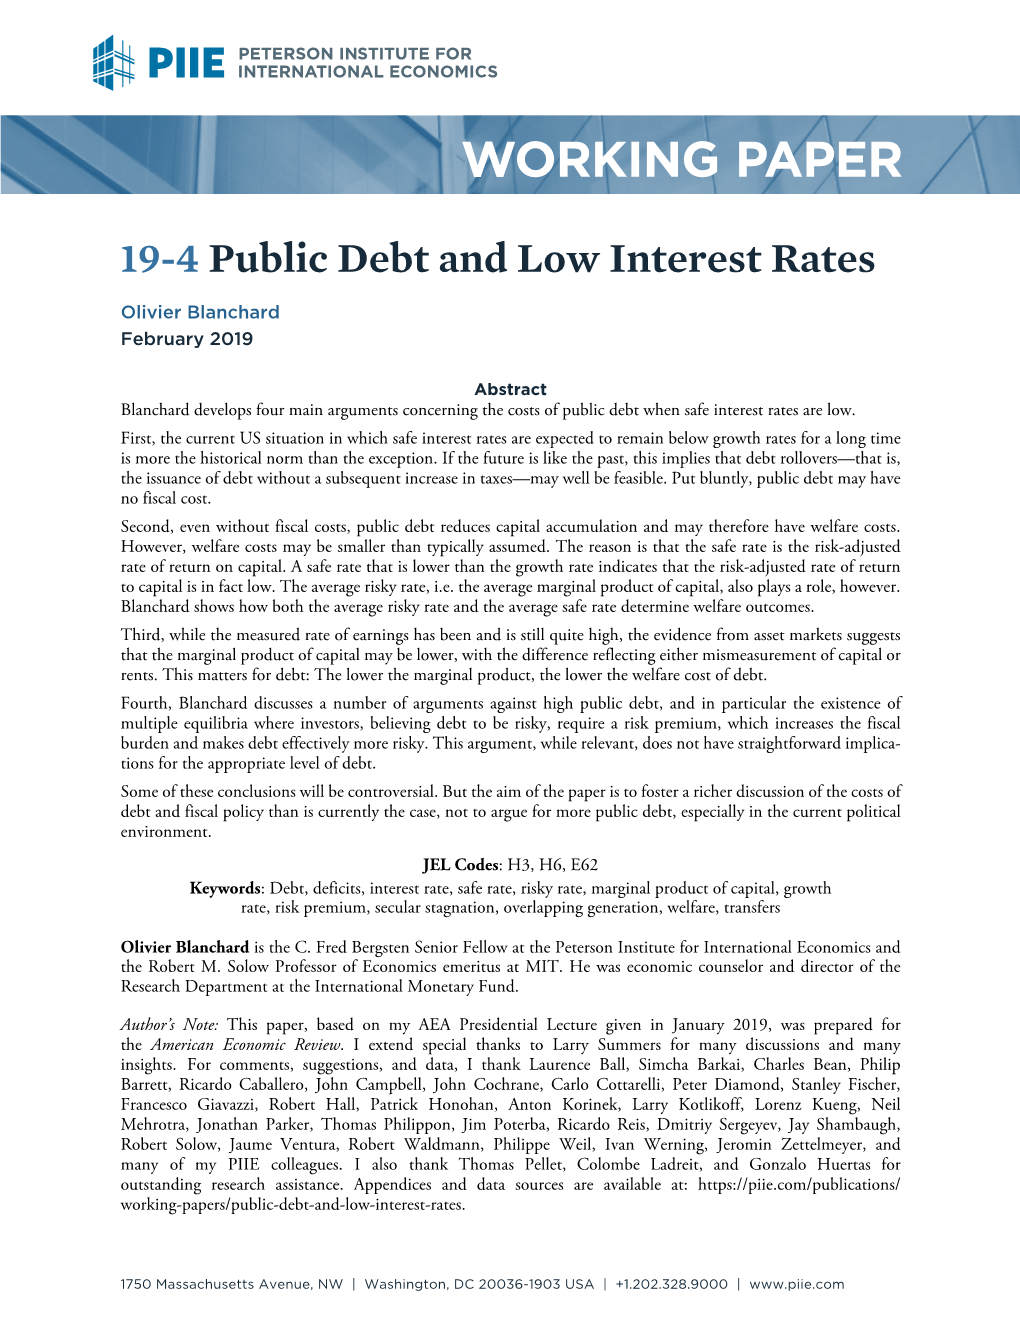 Public Debt and Low Interest Rates